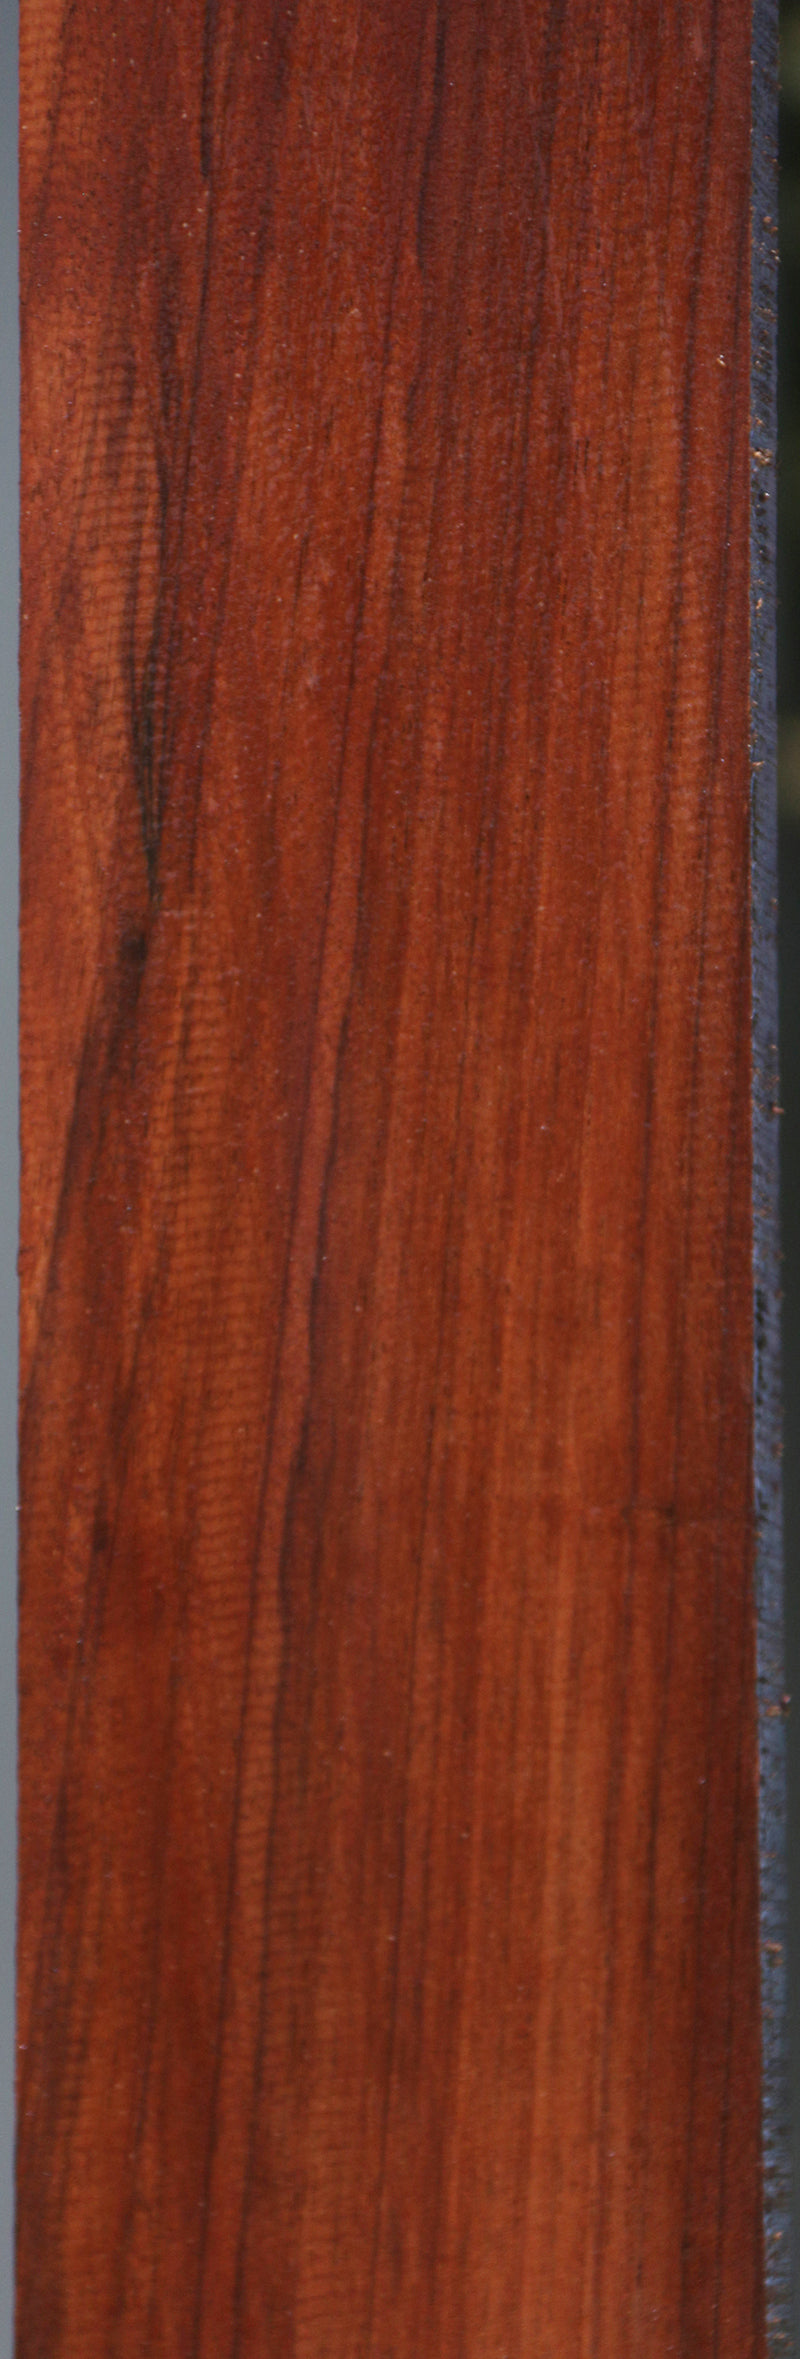 Brazilian Walnut Lumber